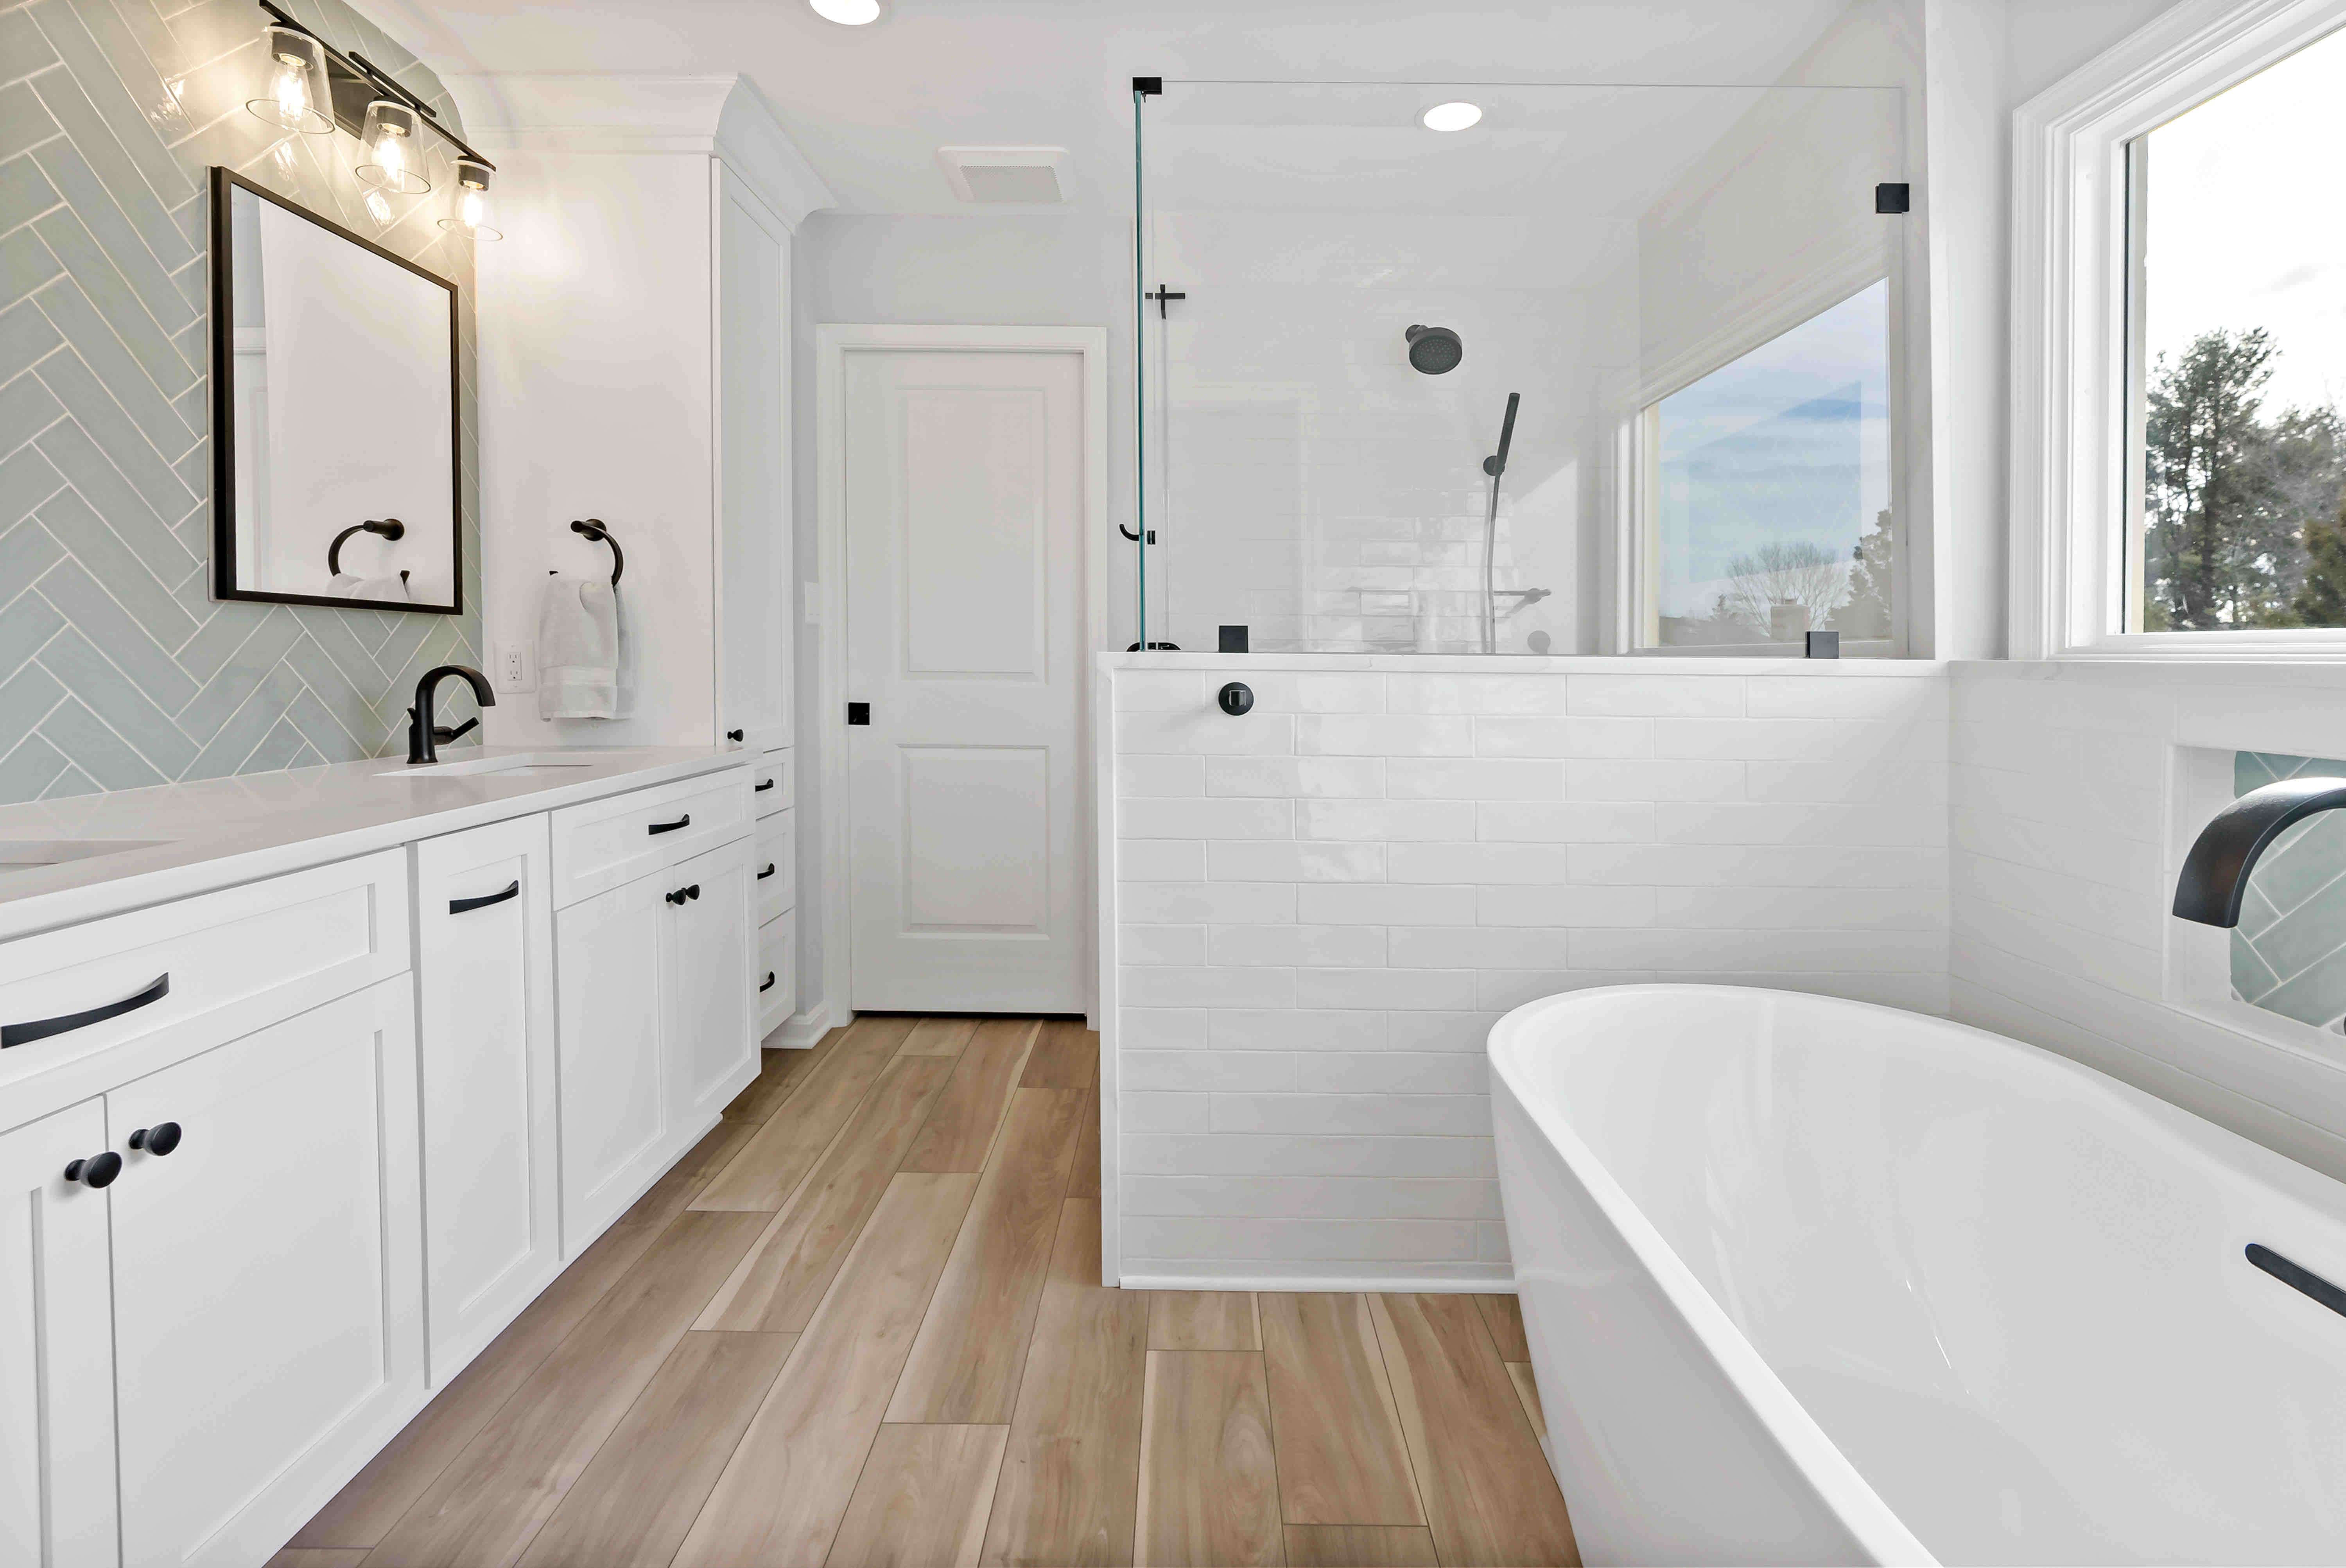 Hardwood floors in white bathroom